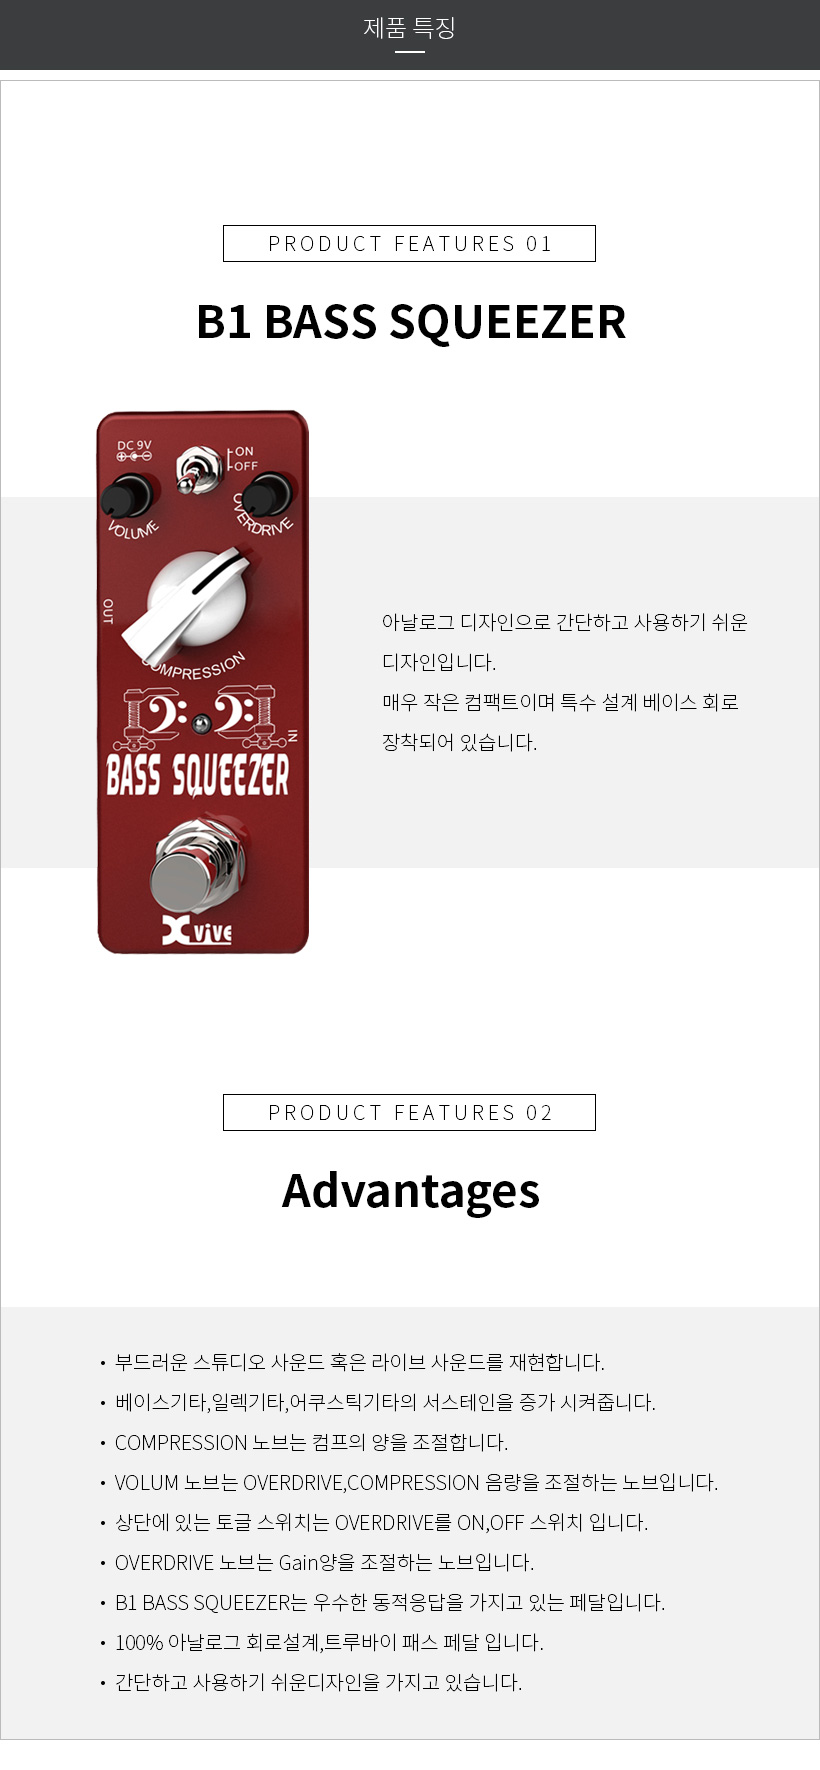  B1 Bass Squeezer 특징 및 장점